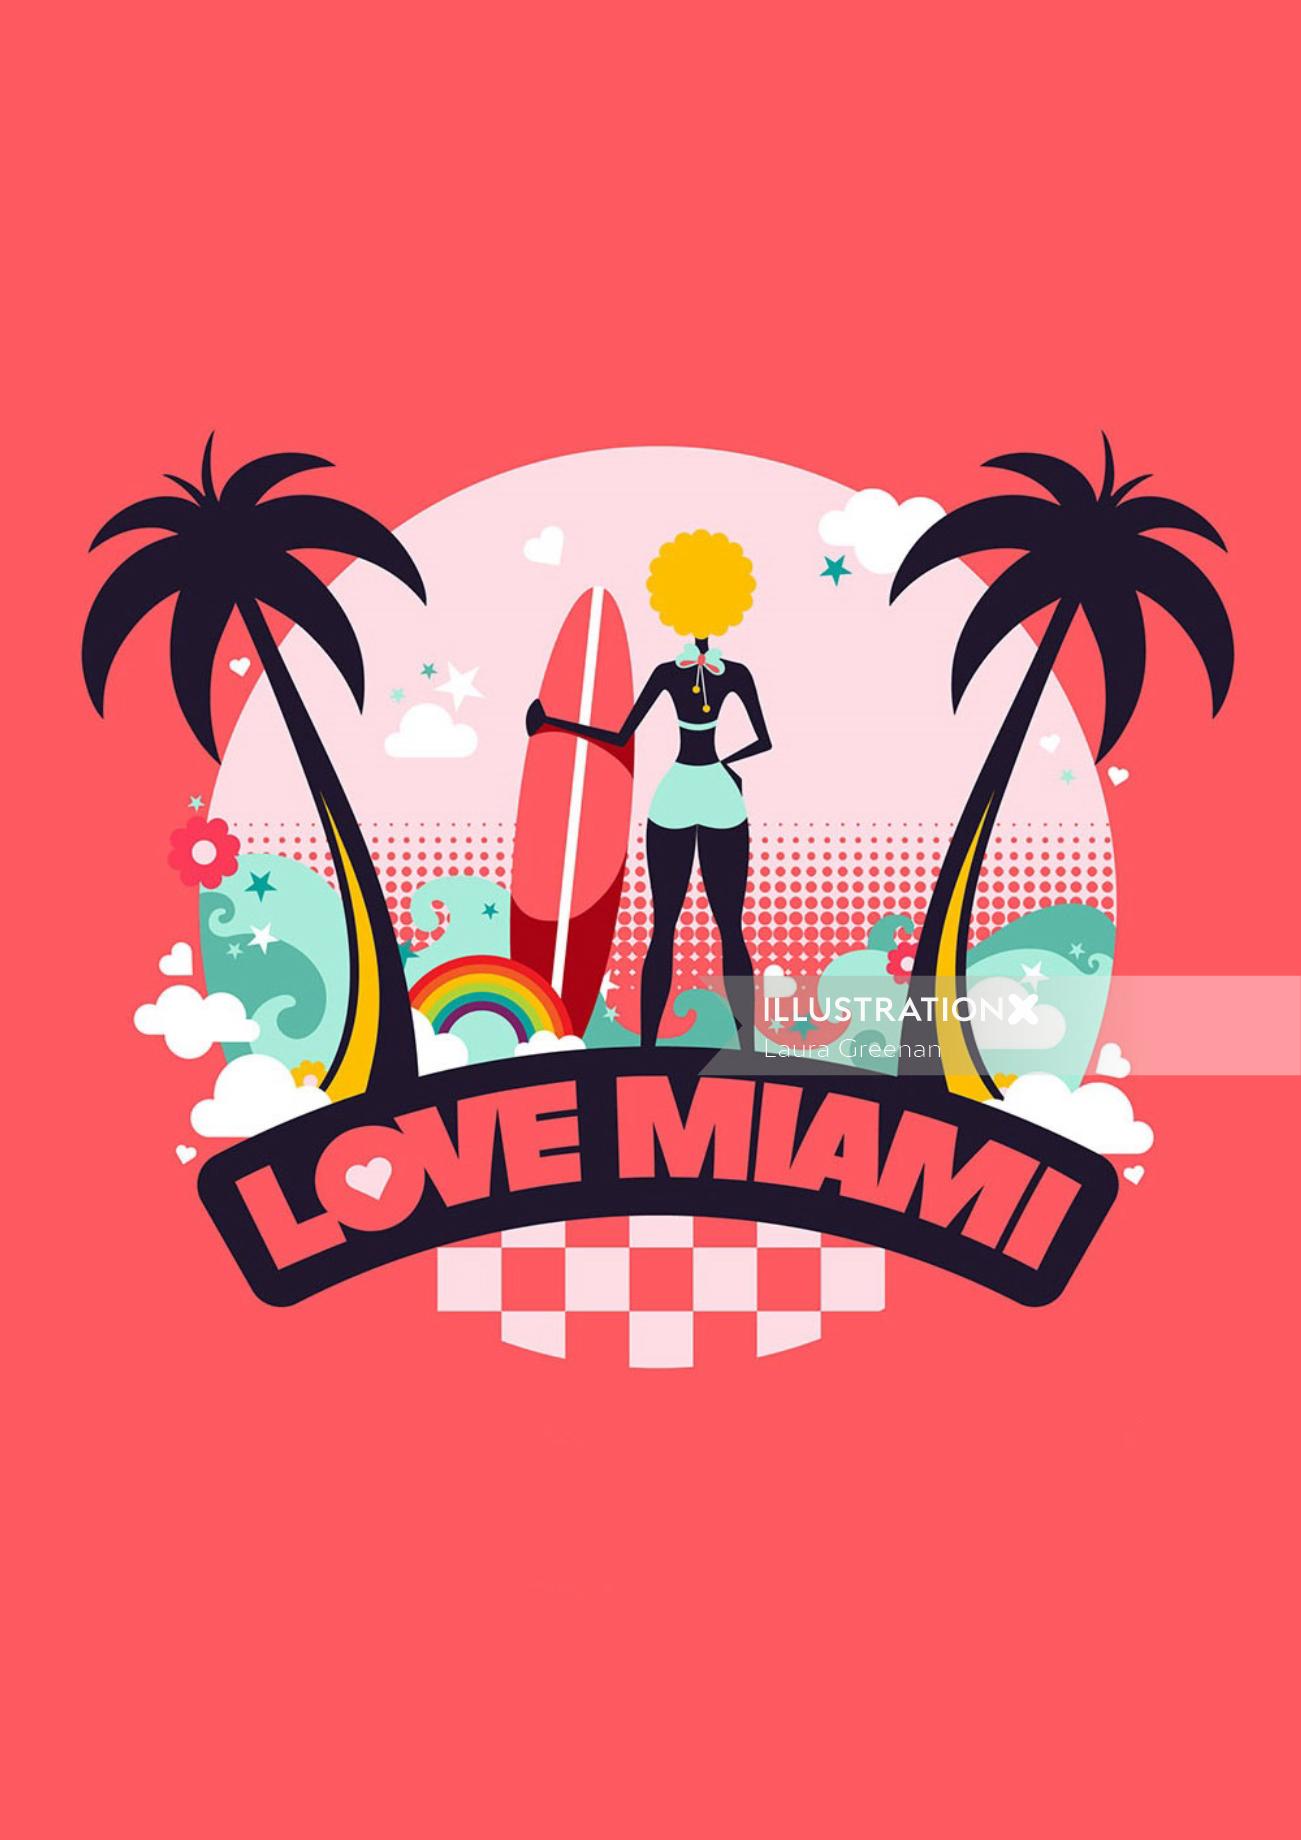 Love Miamiのプロモーションポスター